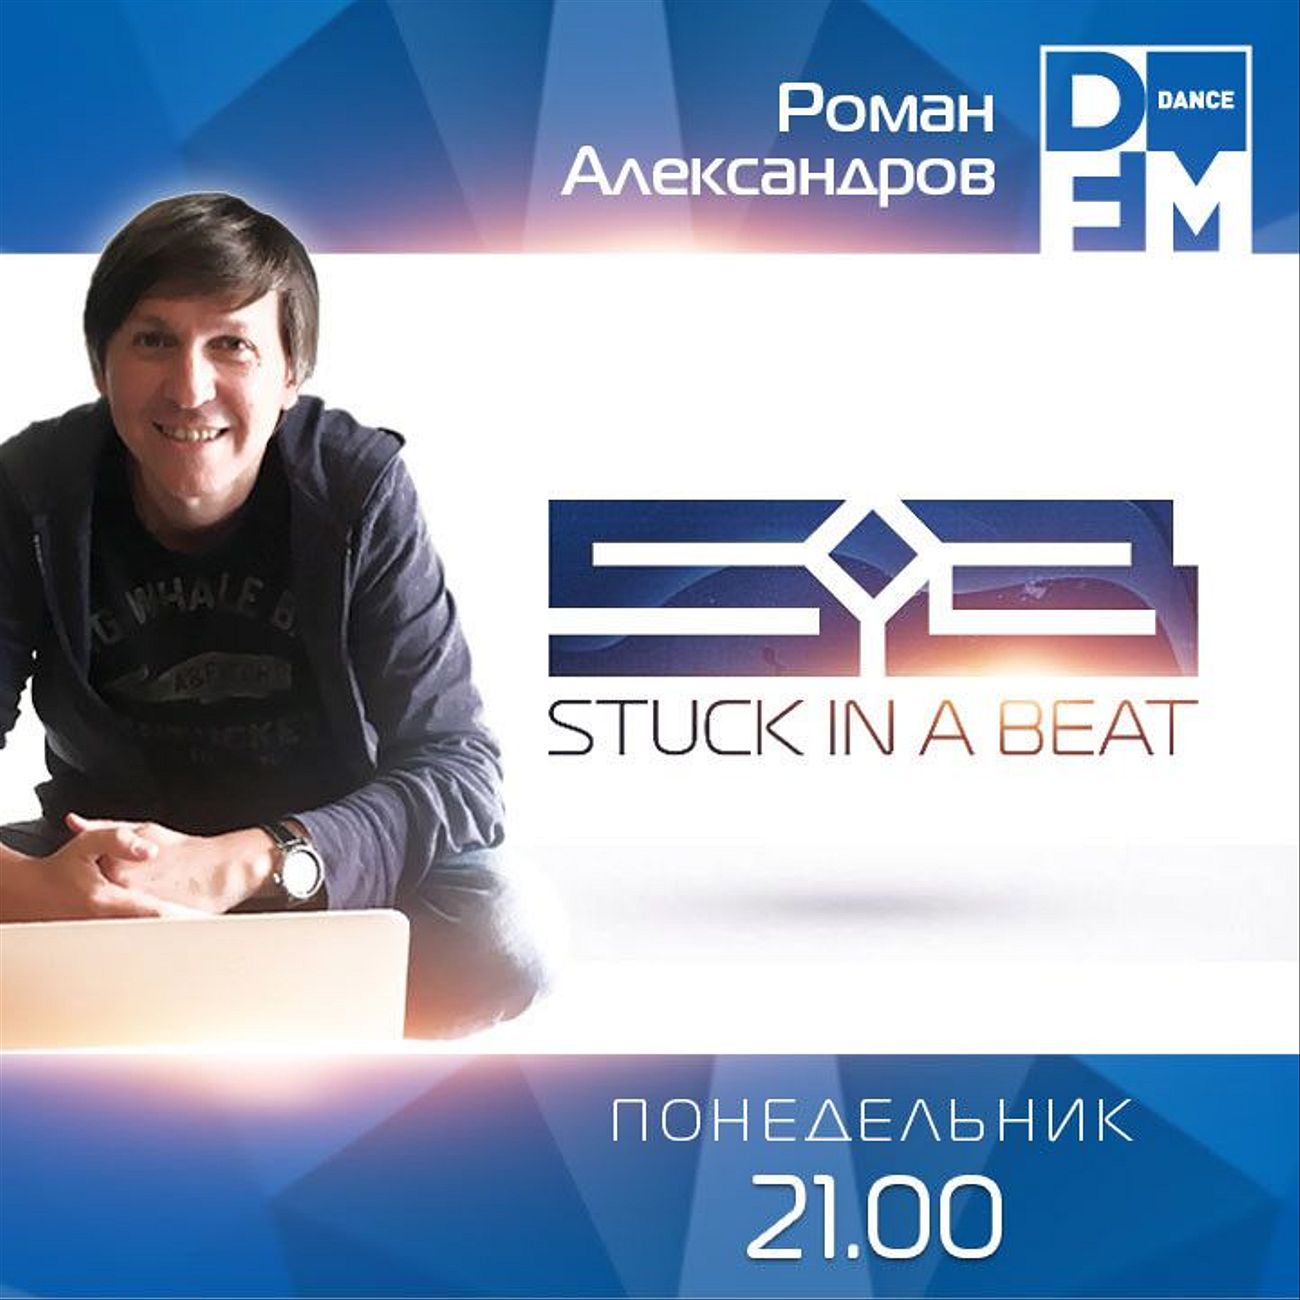 ROMAN ALEXANDROV / STUCK IN A BEAT